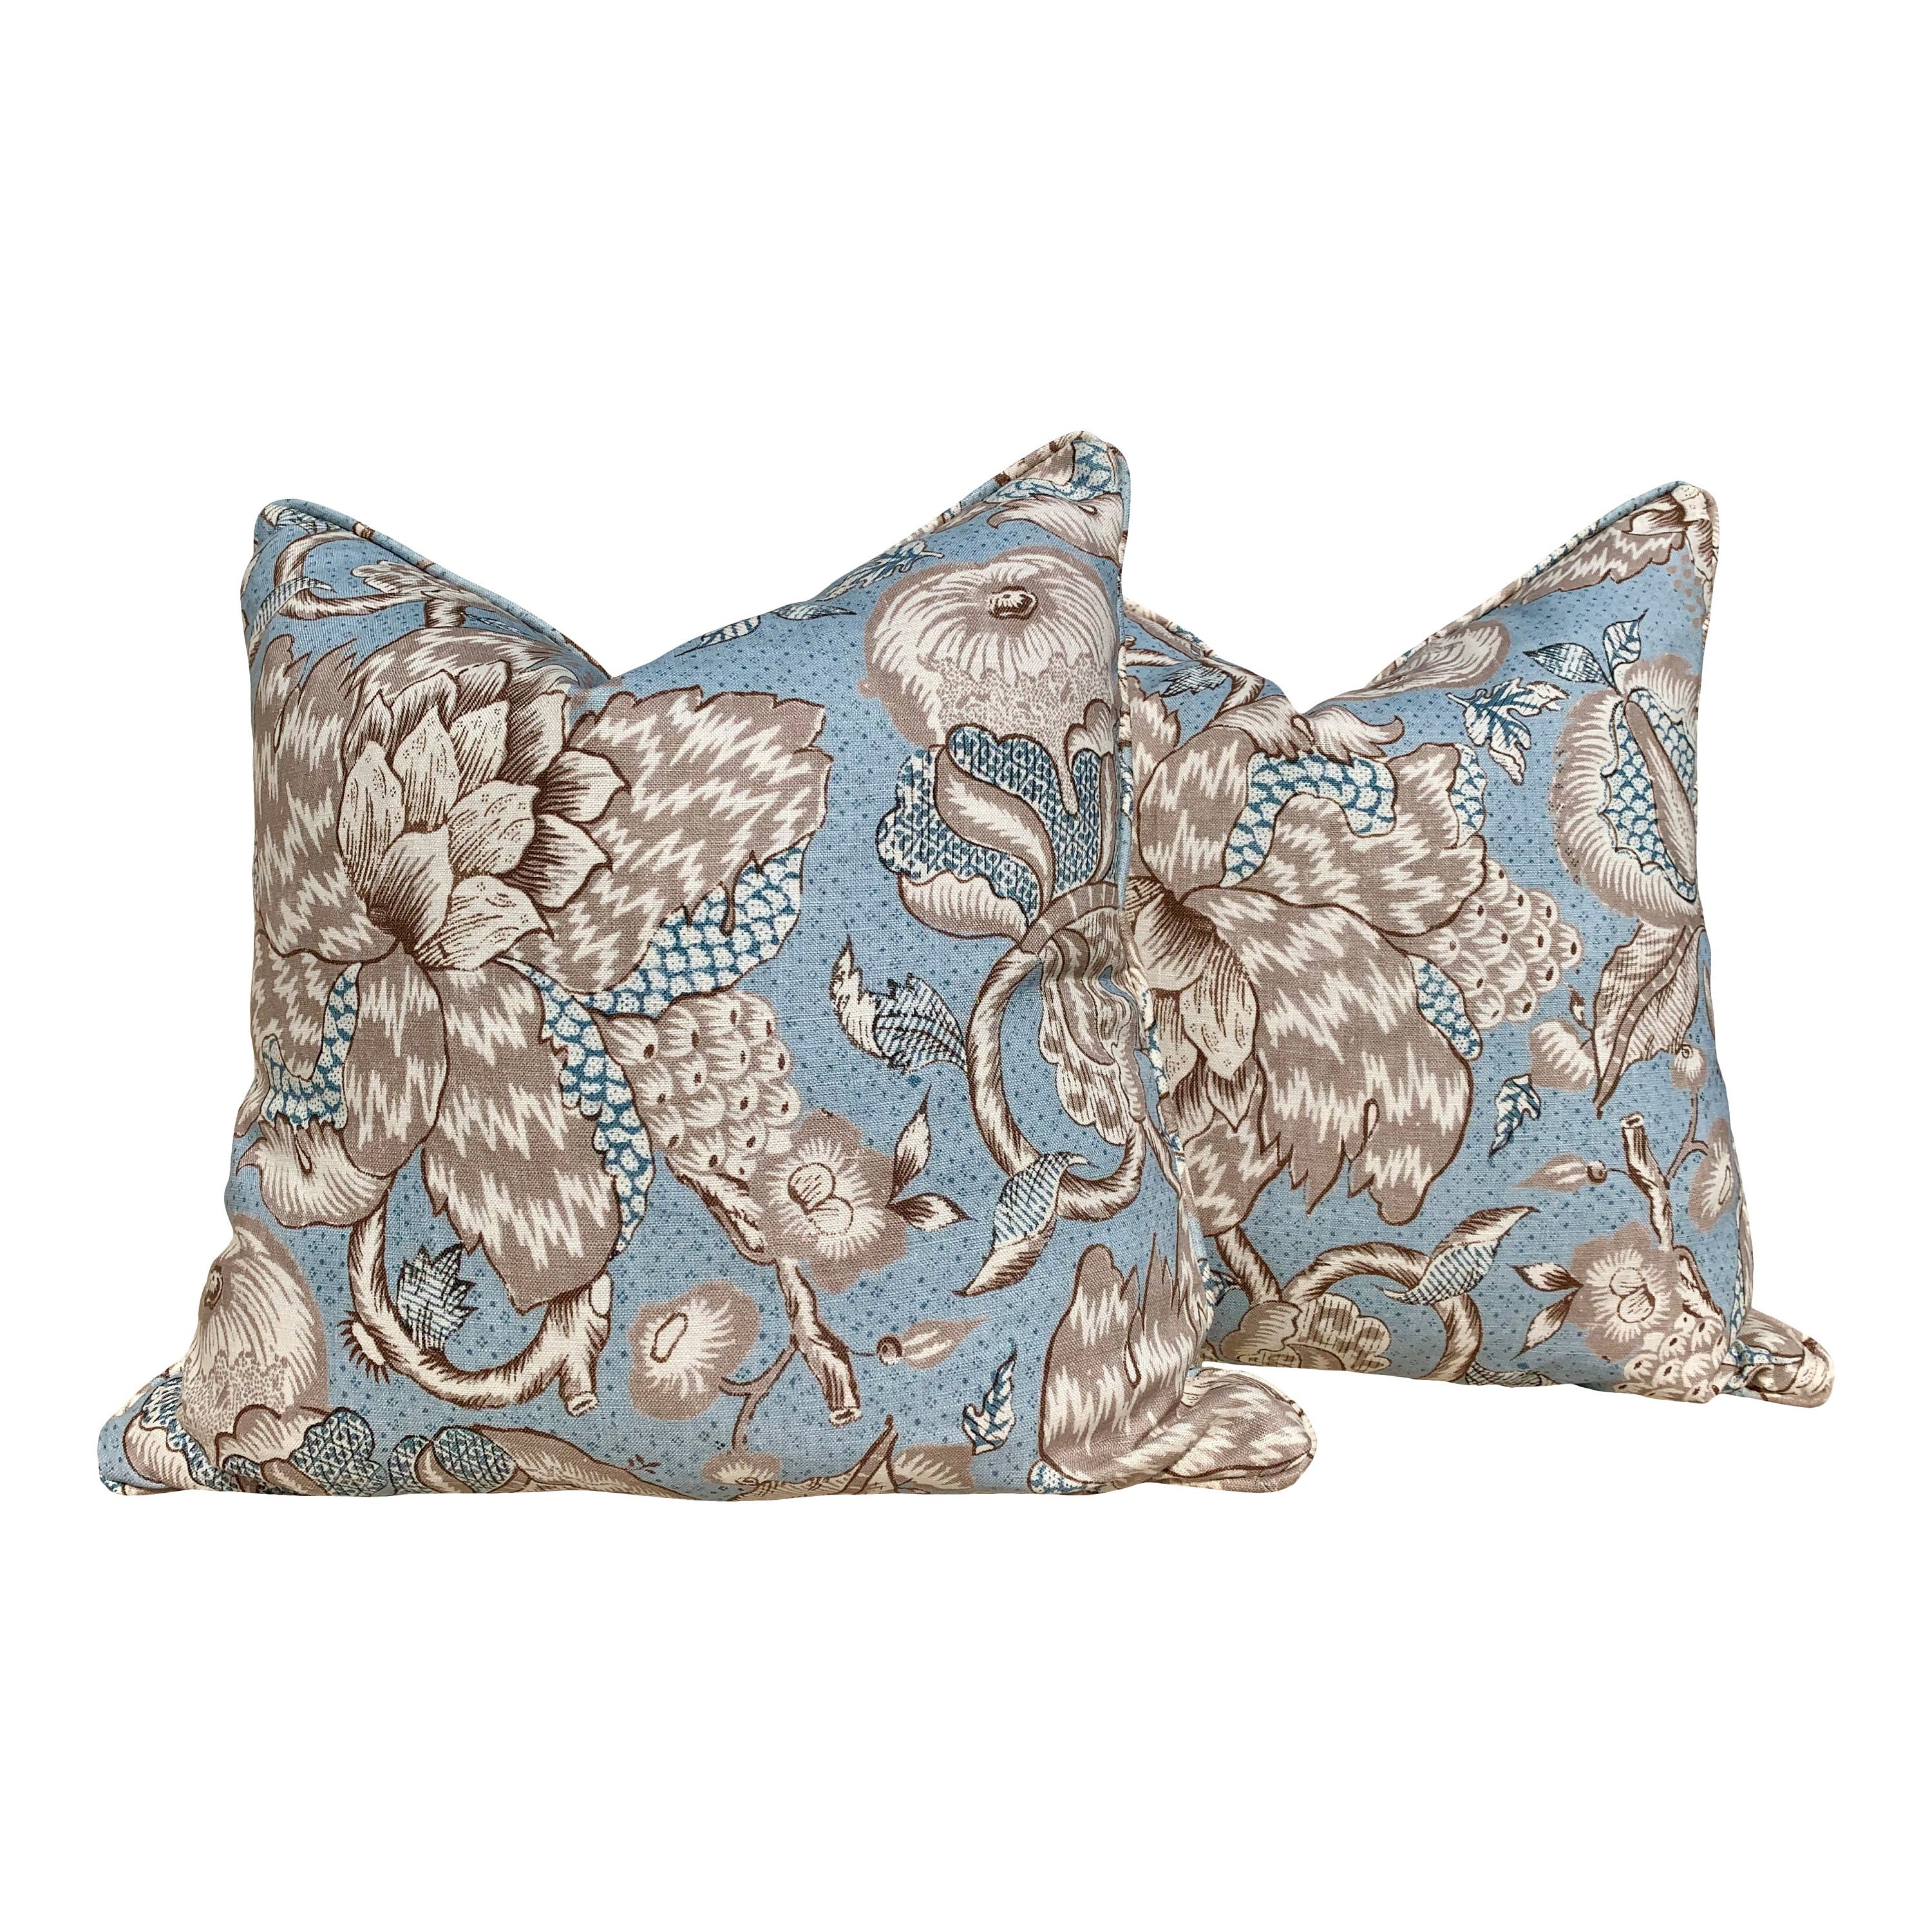 Westmont Pillow in SPA Blue. Lumbar Blue Pillow, Euro Sham Pillow, Aqua Blue Pillow, Designer Floral Throw,  Accent Cushion, Bedding Pillows